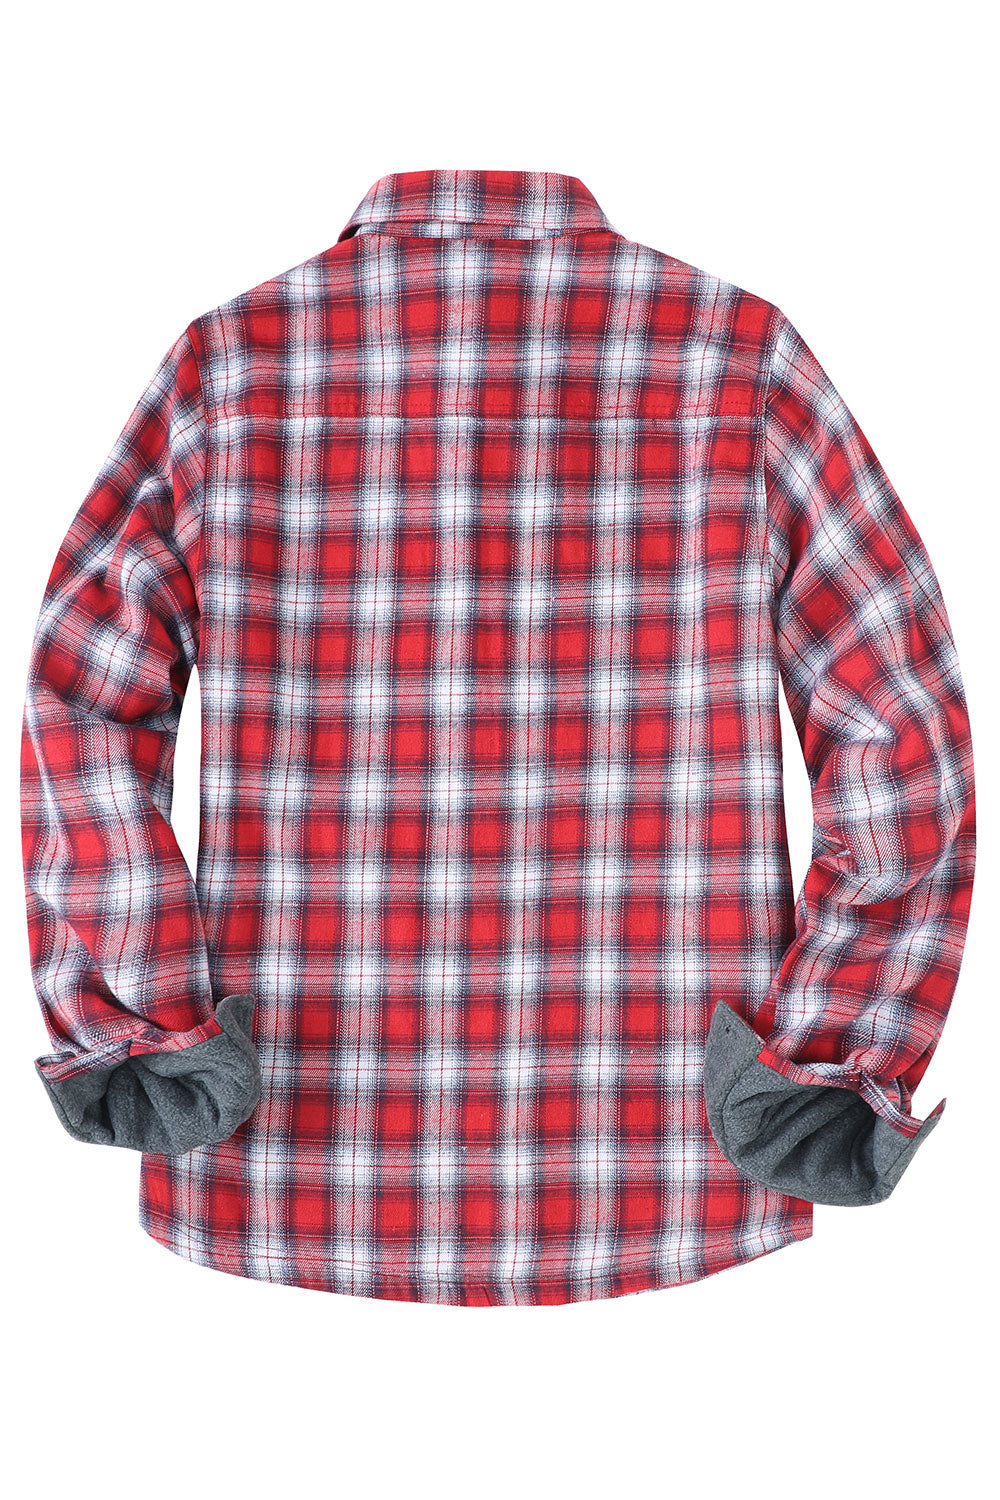 Women's Fleece Lined Plaid Button Down Flannel Shirt Jacket – FlannelGo